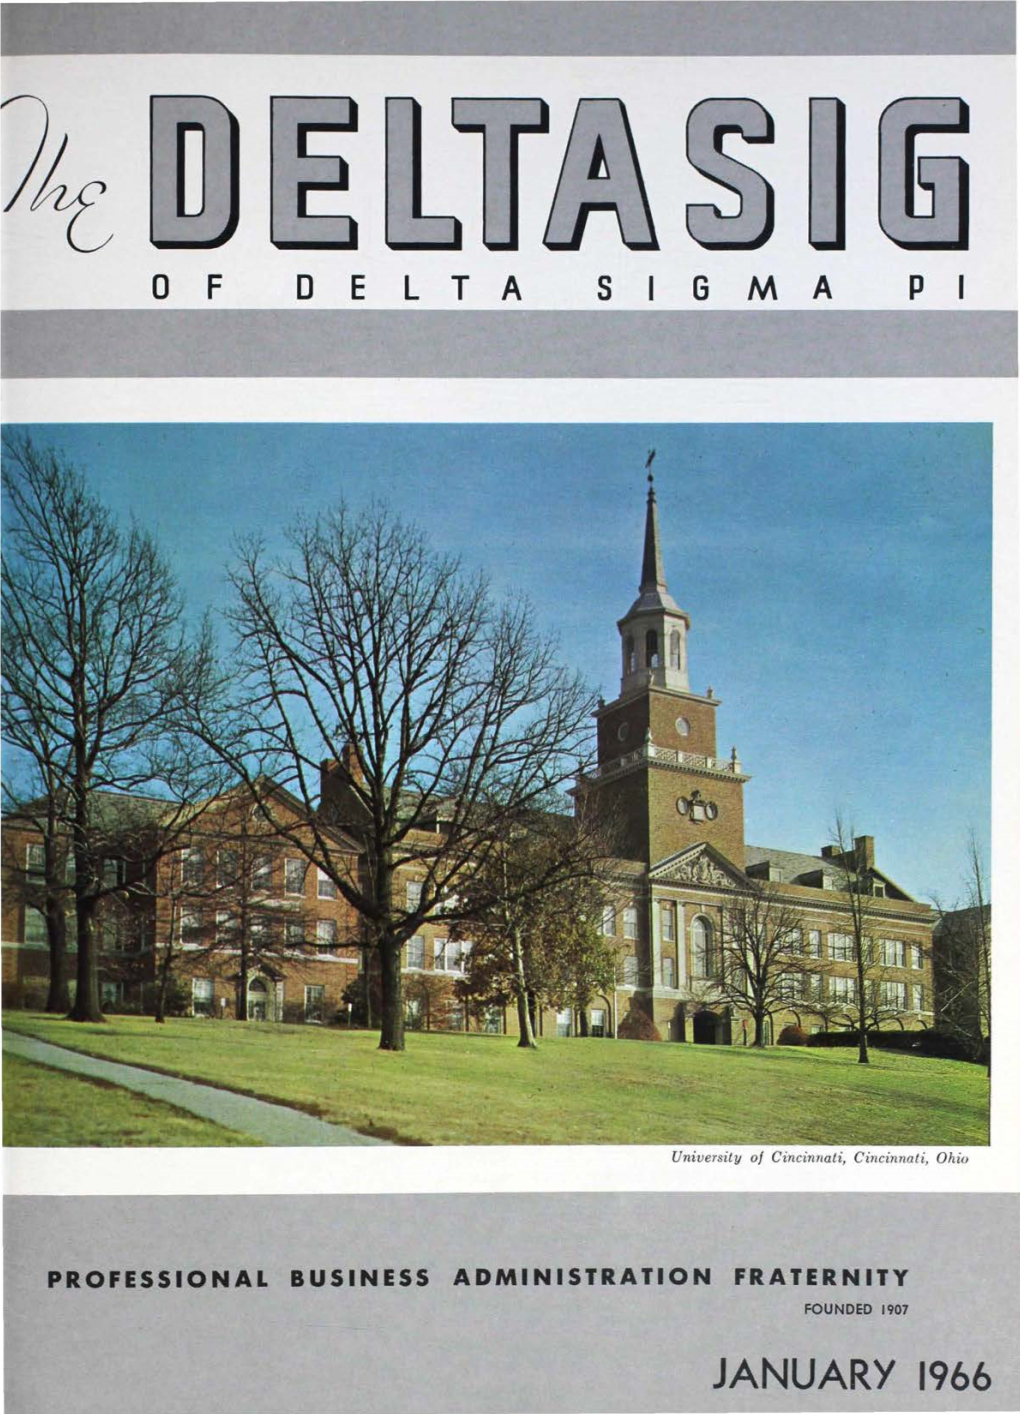 JANUARY 1966 the International Fraternity of Delta Sigma Pi